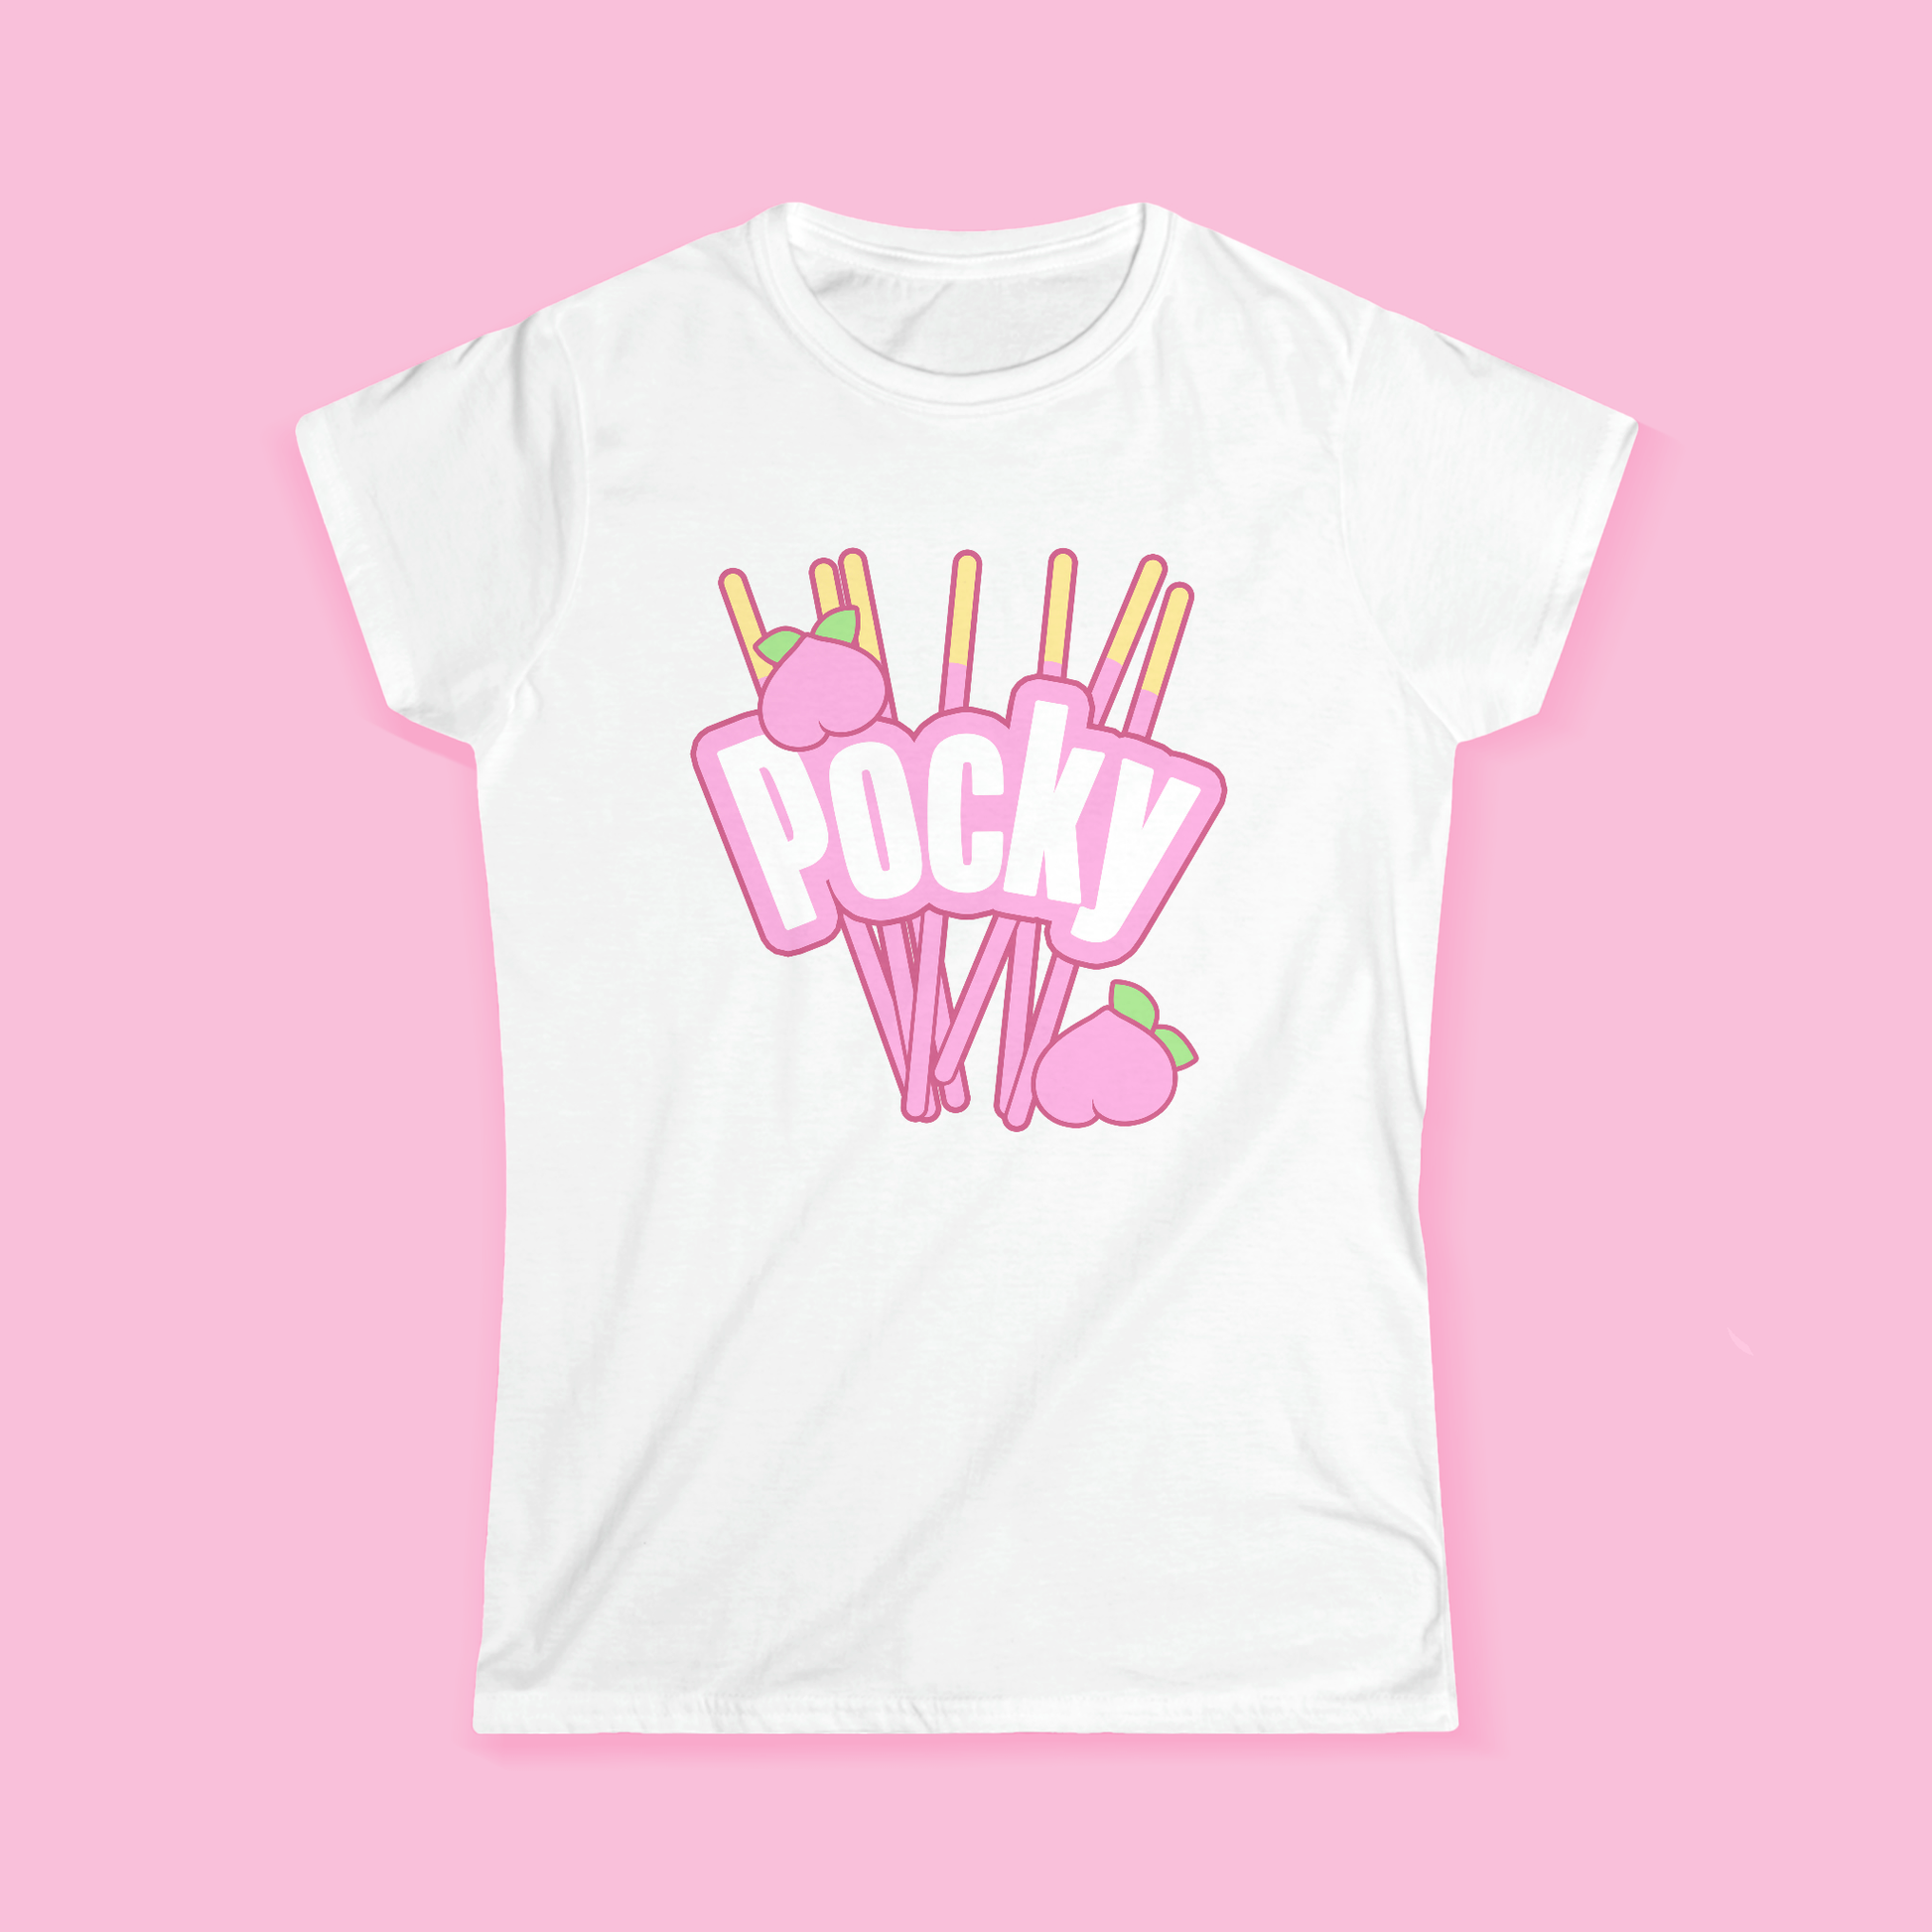 Hello Kitty Kawaii T-shirts - Anime Women V Top Shirt Tee Cotton